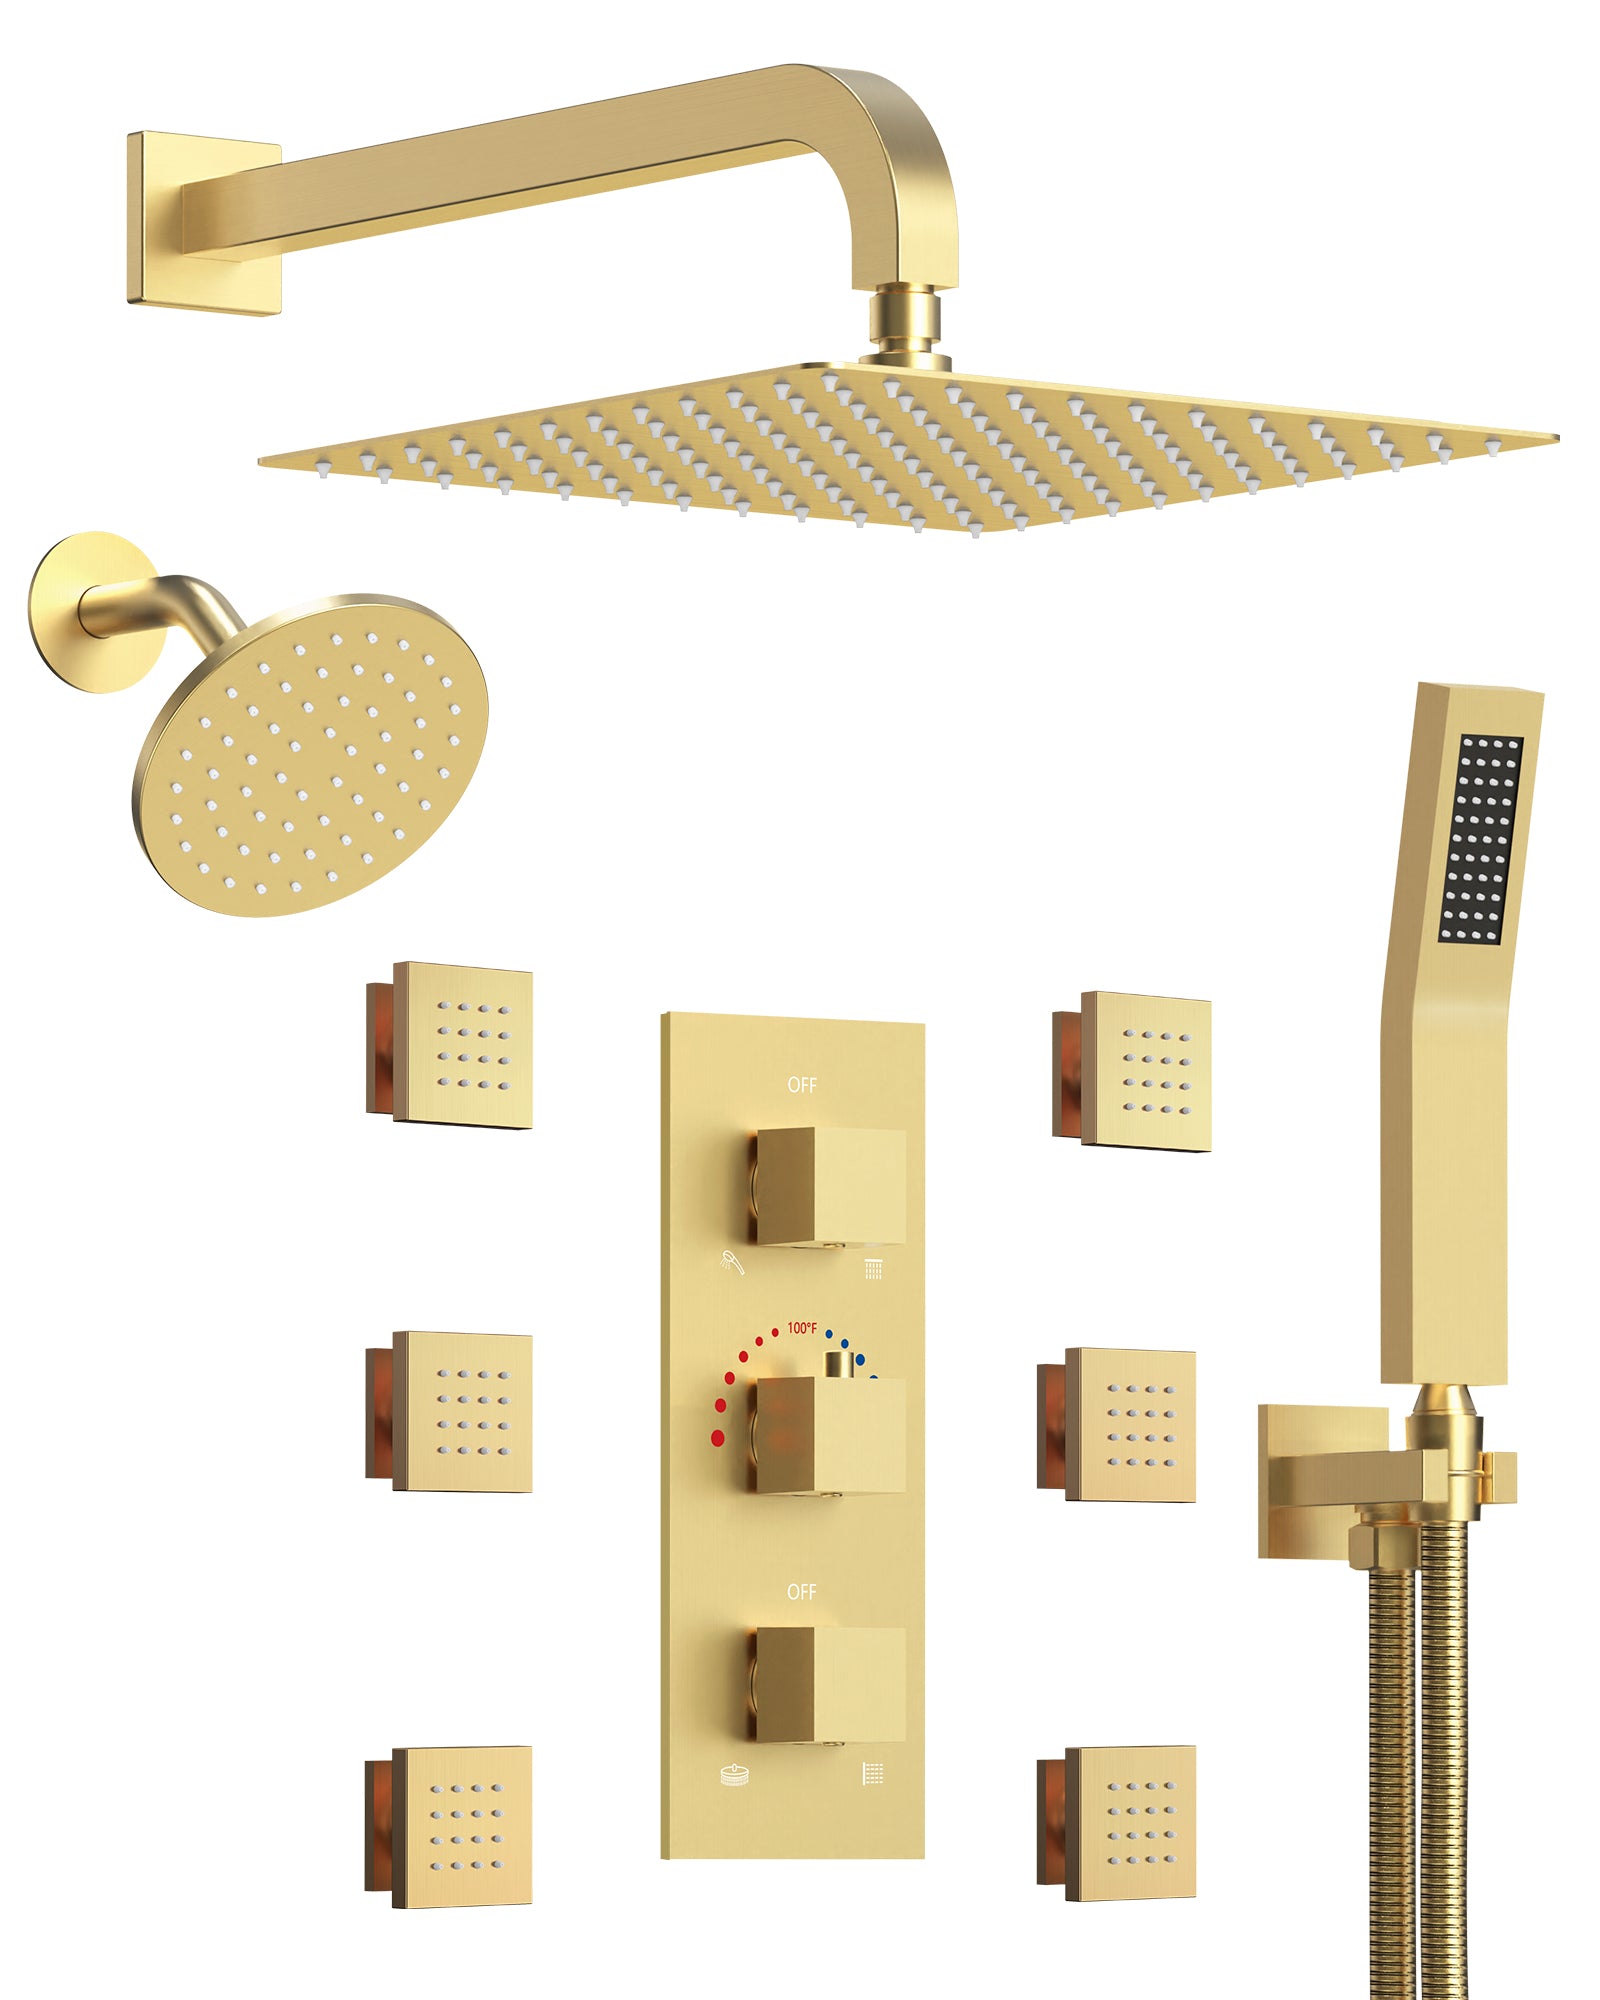 EVERSTEIN Gold Luxury Dual Rain Shower Heads Set - 12" Square Ceiling, Handheld Spray, Body Massage Jets, 8 Spray Modes Combo